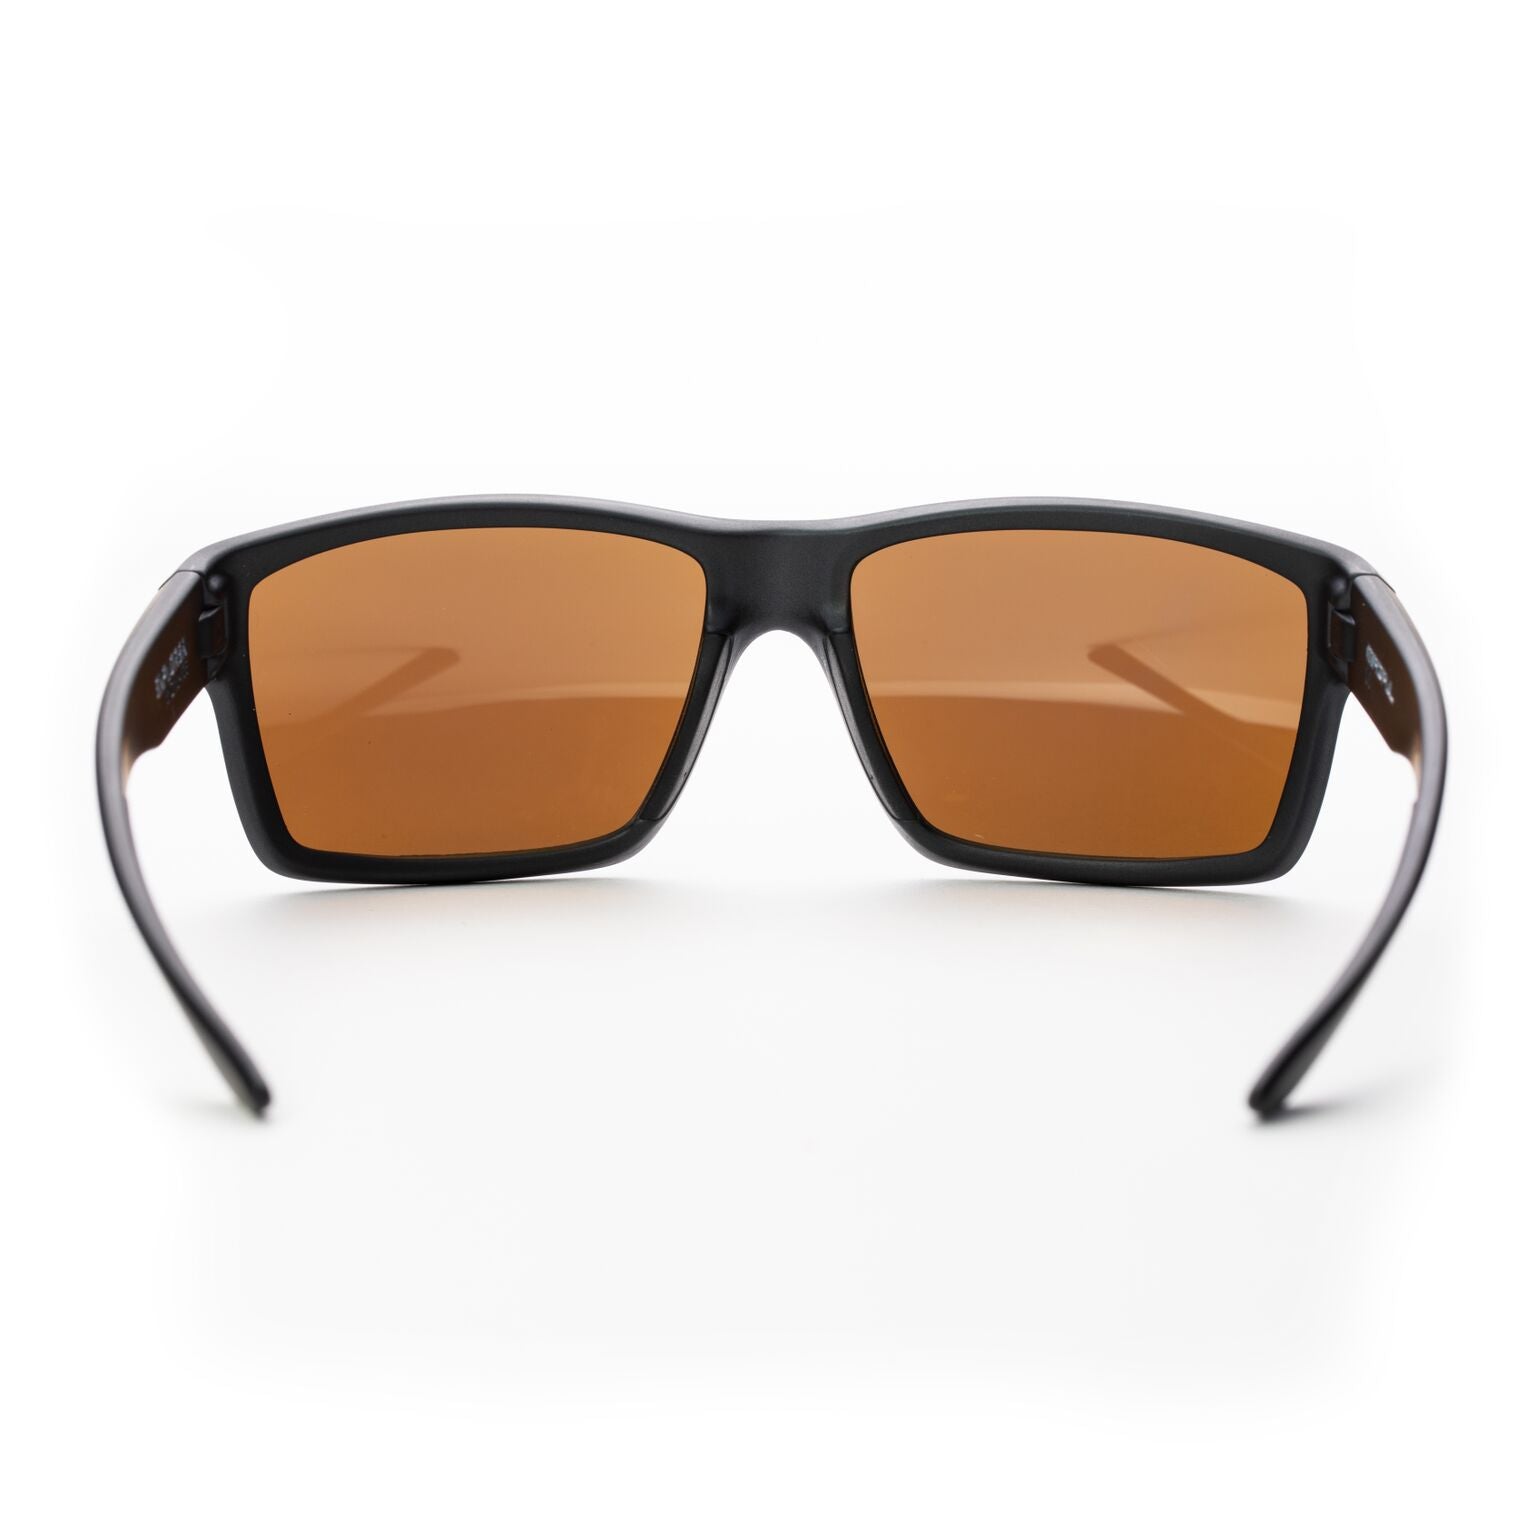 Magpul Explorer Eyewear - Black Frame - Polarized Lens Eyewear Magpul 